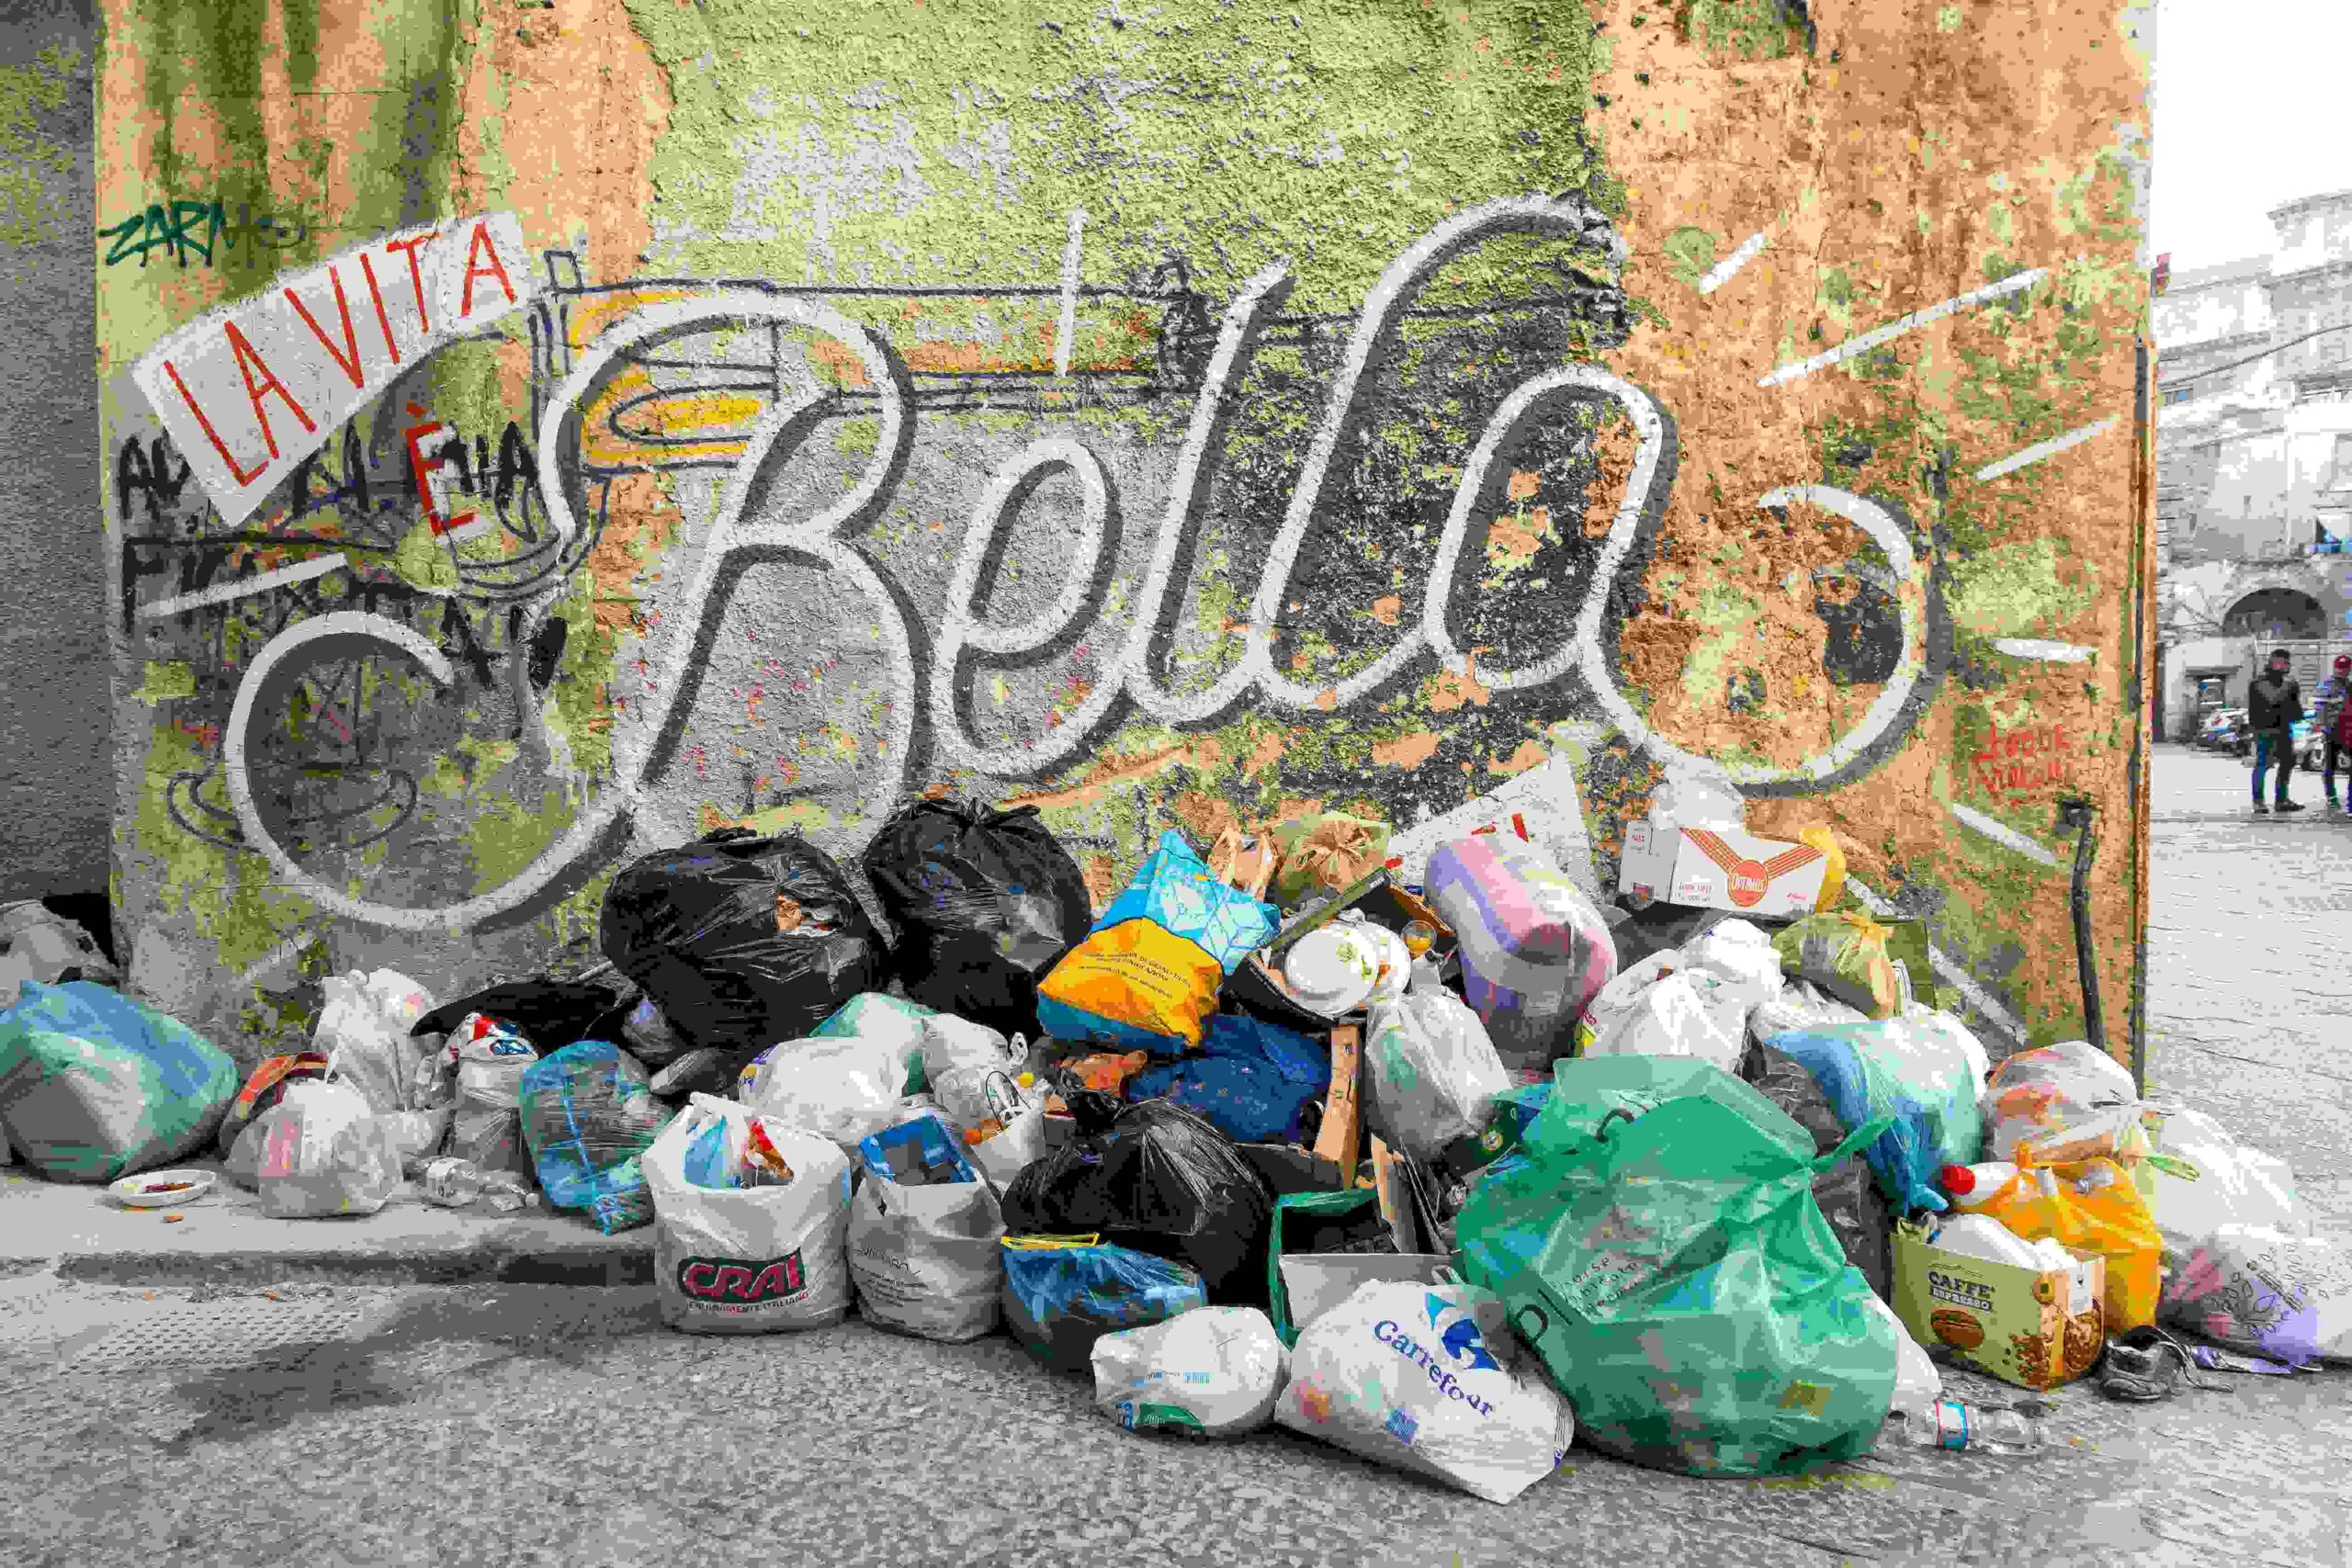 Etienne Girardet - Unsplash - La vita e Bella (Life is Beautiful). Garbage on the street corner in Sicily.